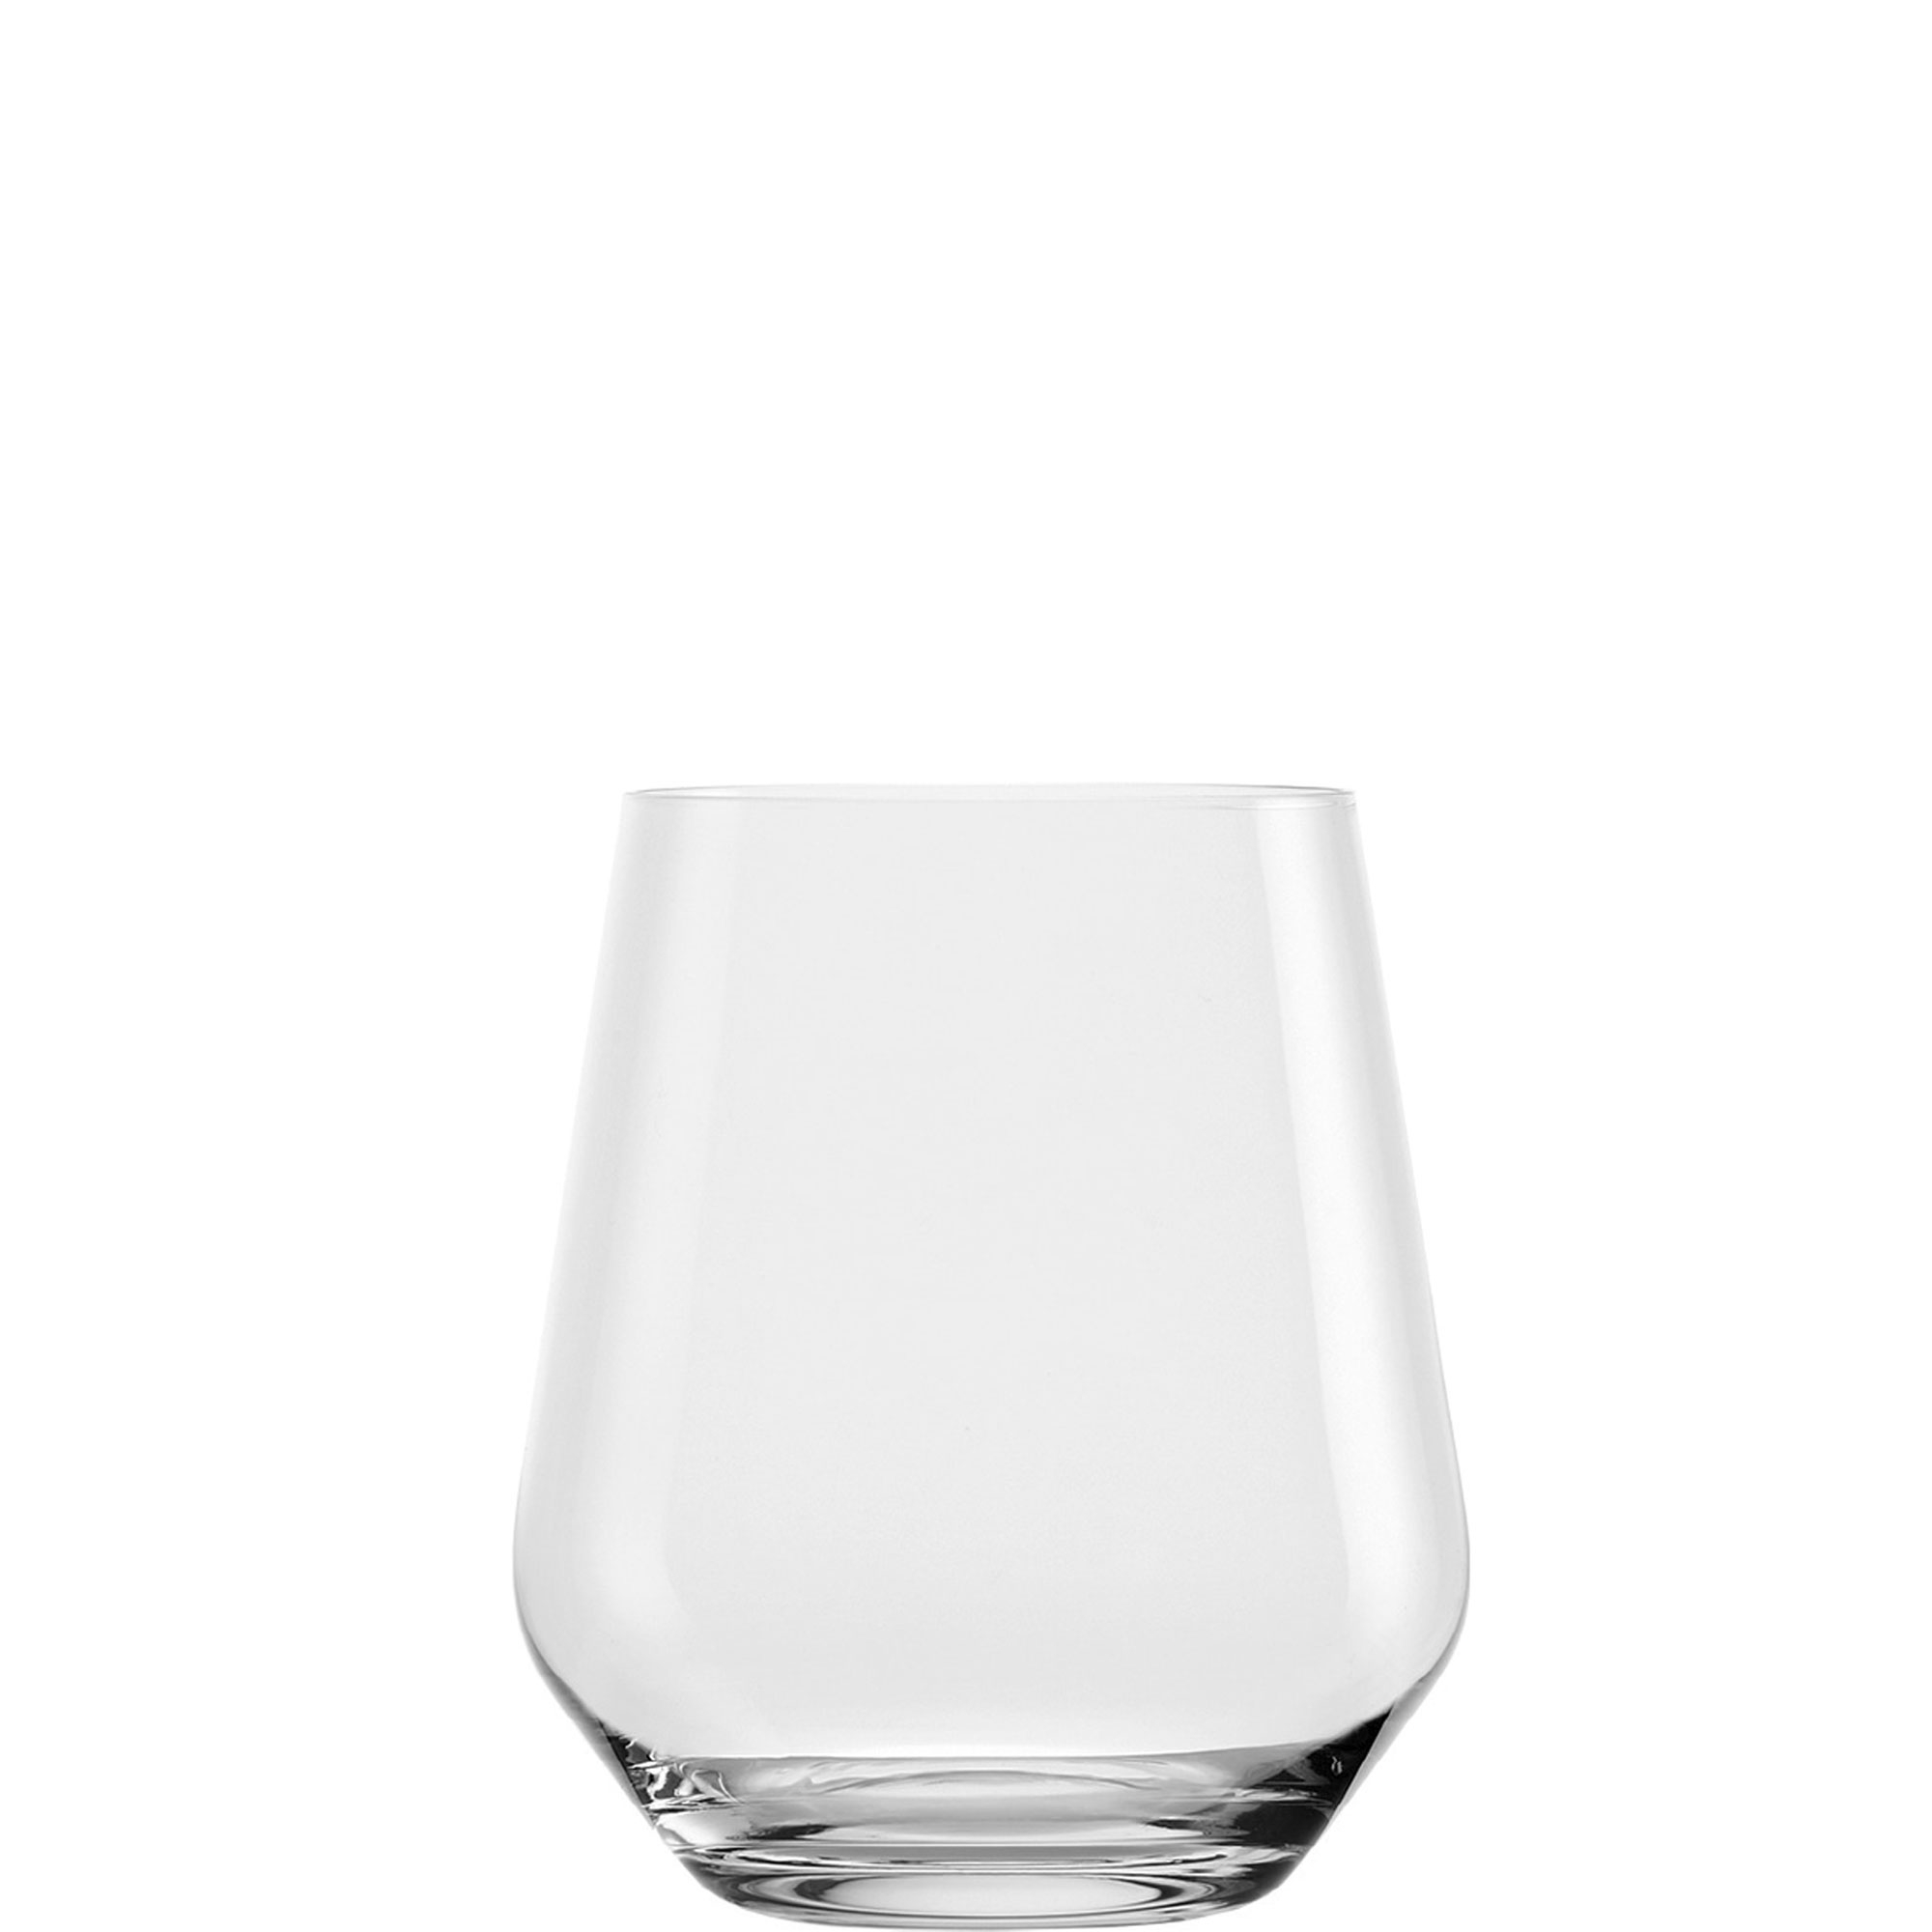 Whiskyglas D.O.F. Quatrophil, Stölzle - 470ml